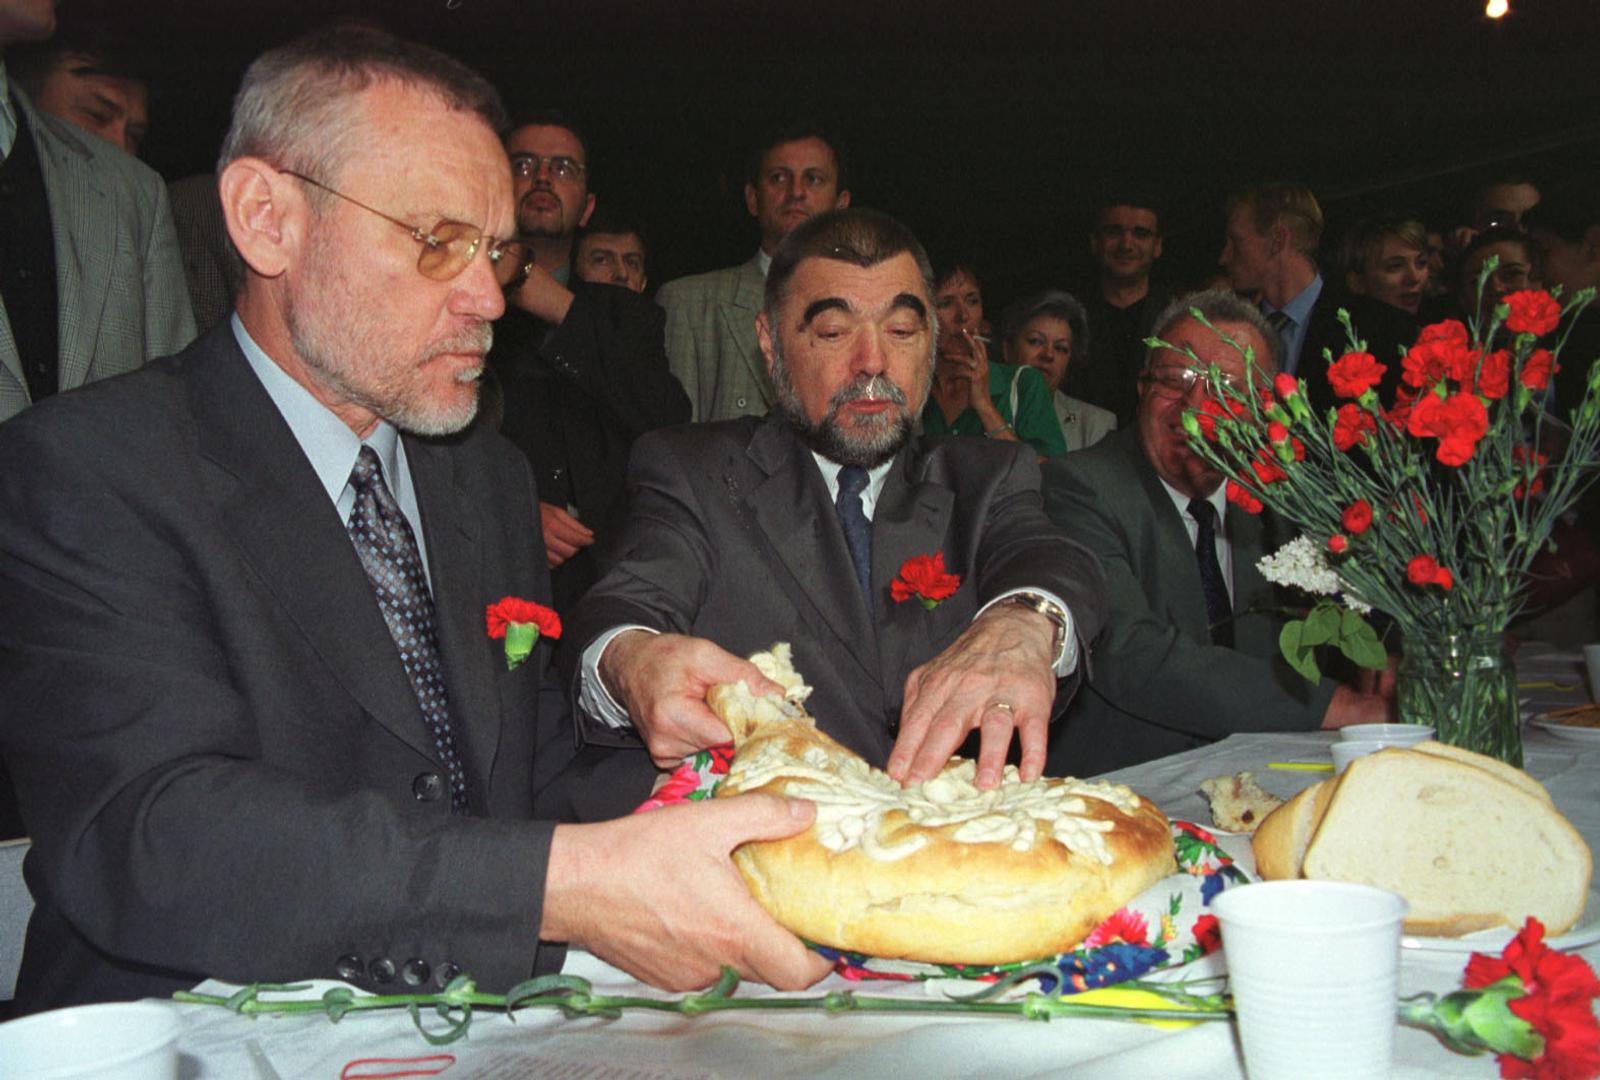 01.05.2000., Zagreb - Proslava Praznika rada u Maksimiru. Photo: Zeljko Lukunic/PIXSELL